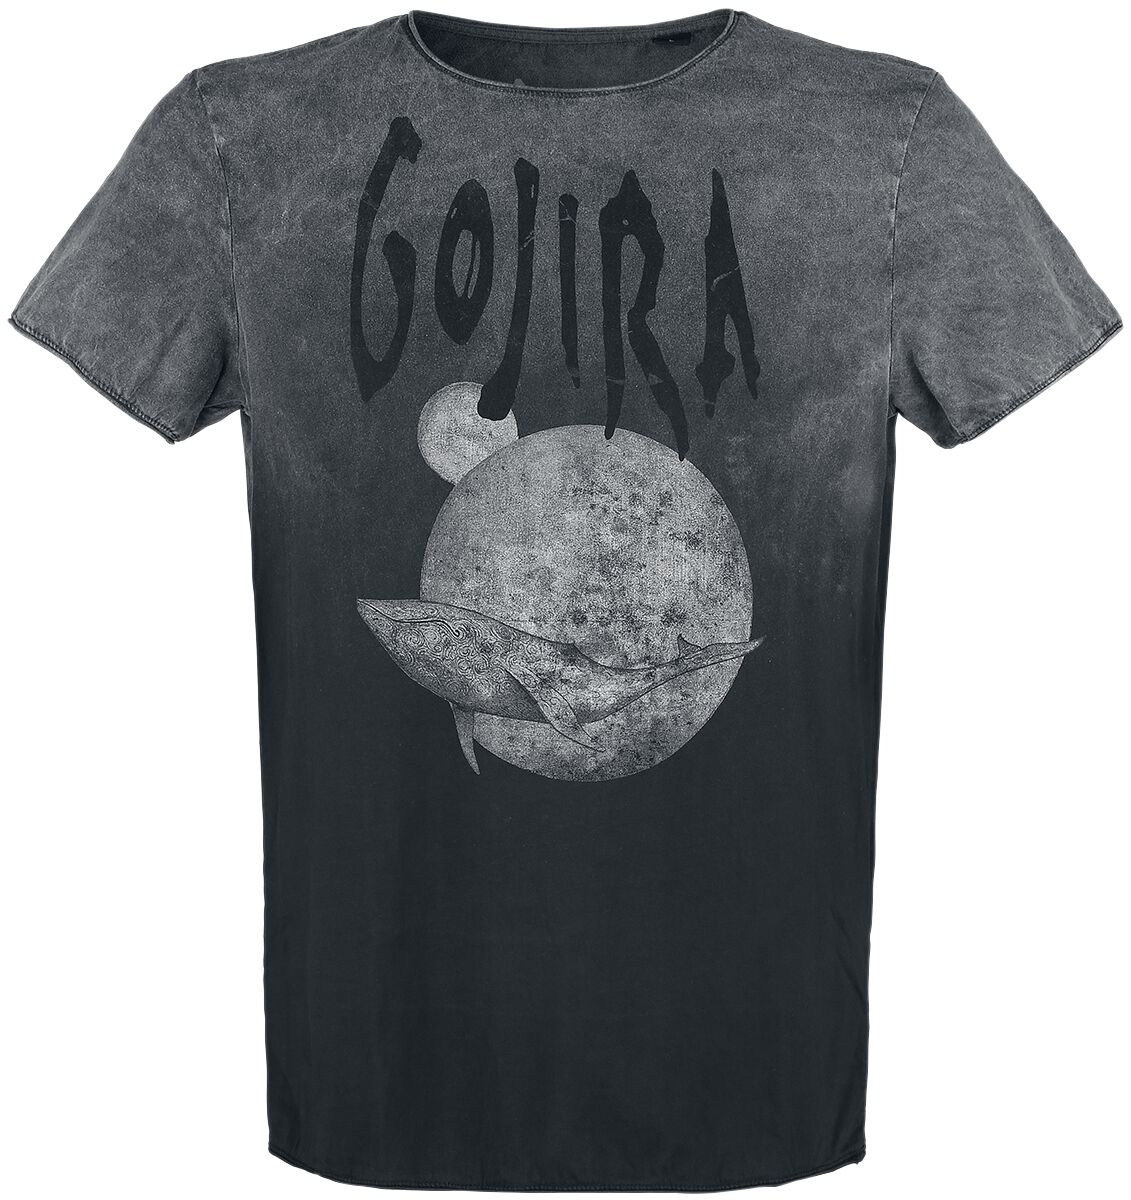 Gojira From Mars Reprise T-Shirt dunkelgrau grau in M von Gojira